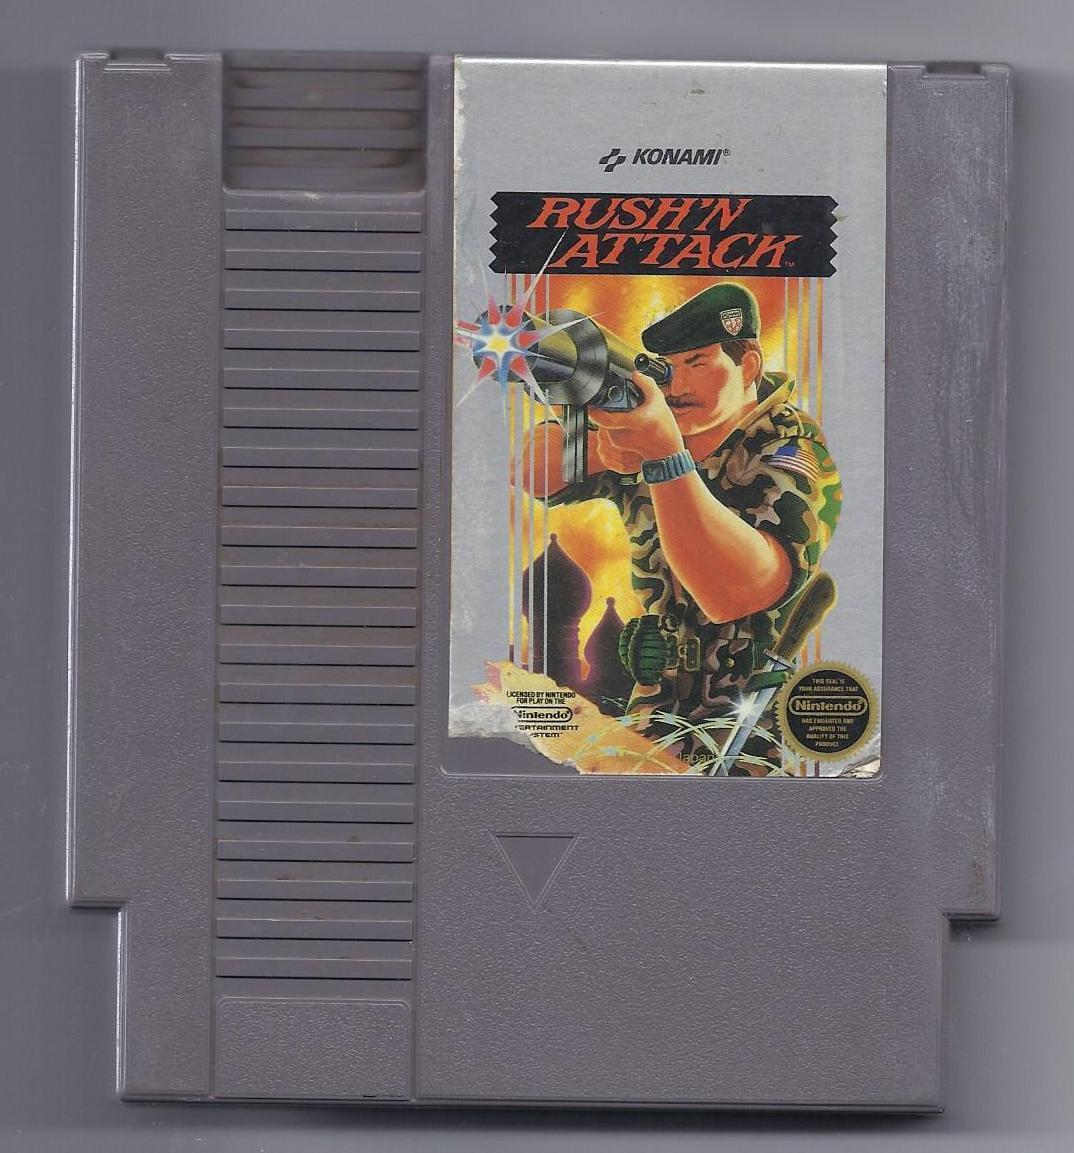 Primary image for Vintage Nintendo Rush'n Attack Video Game NES Cartridge VHTF Konami